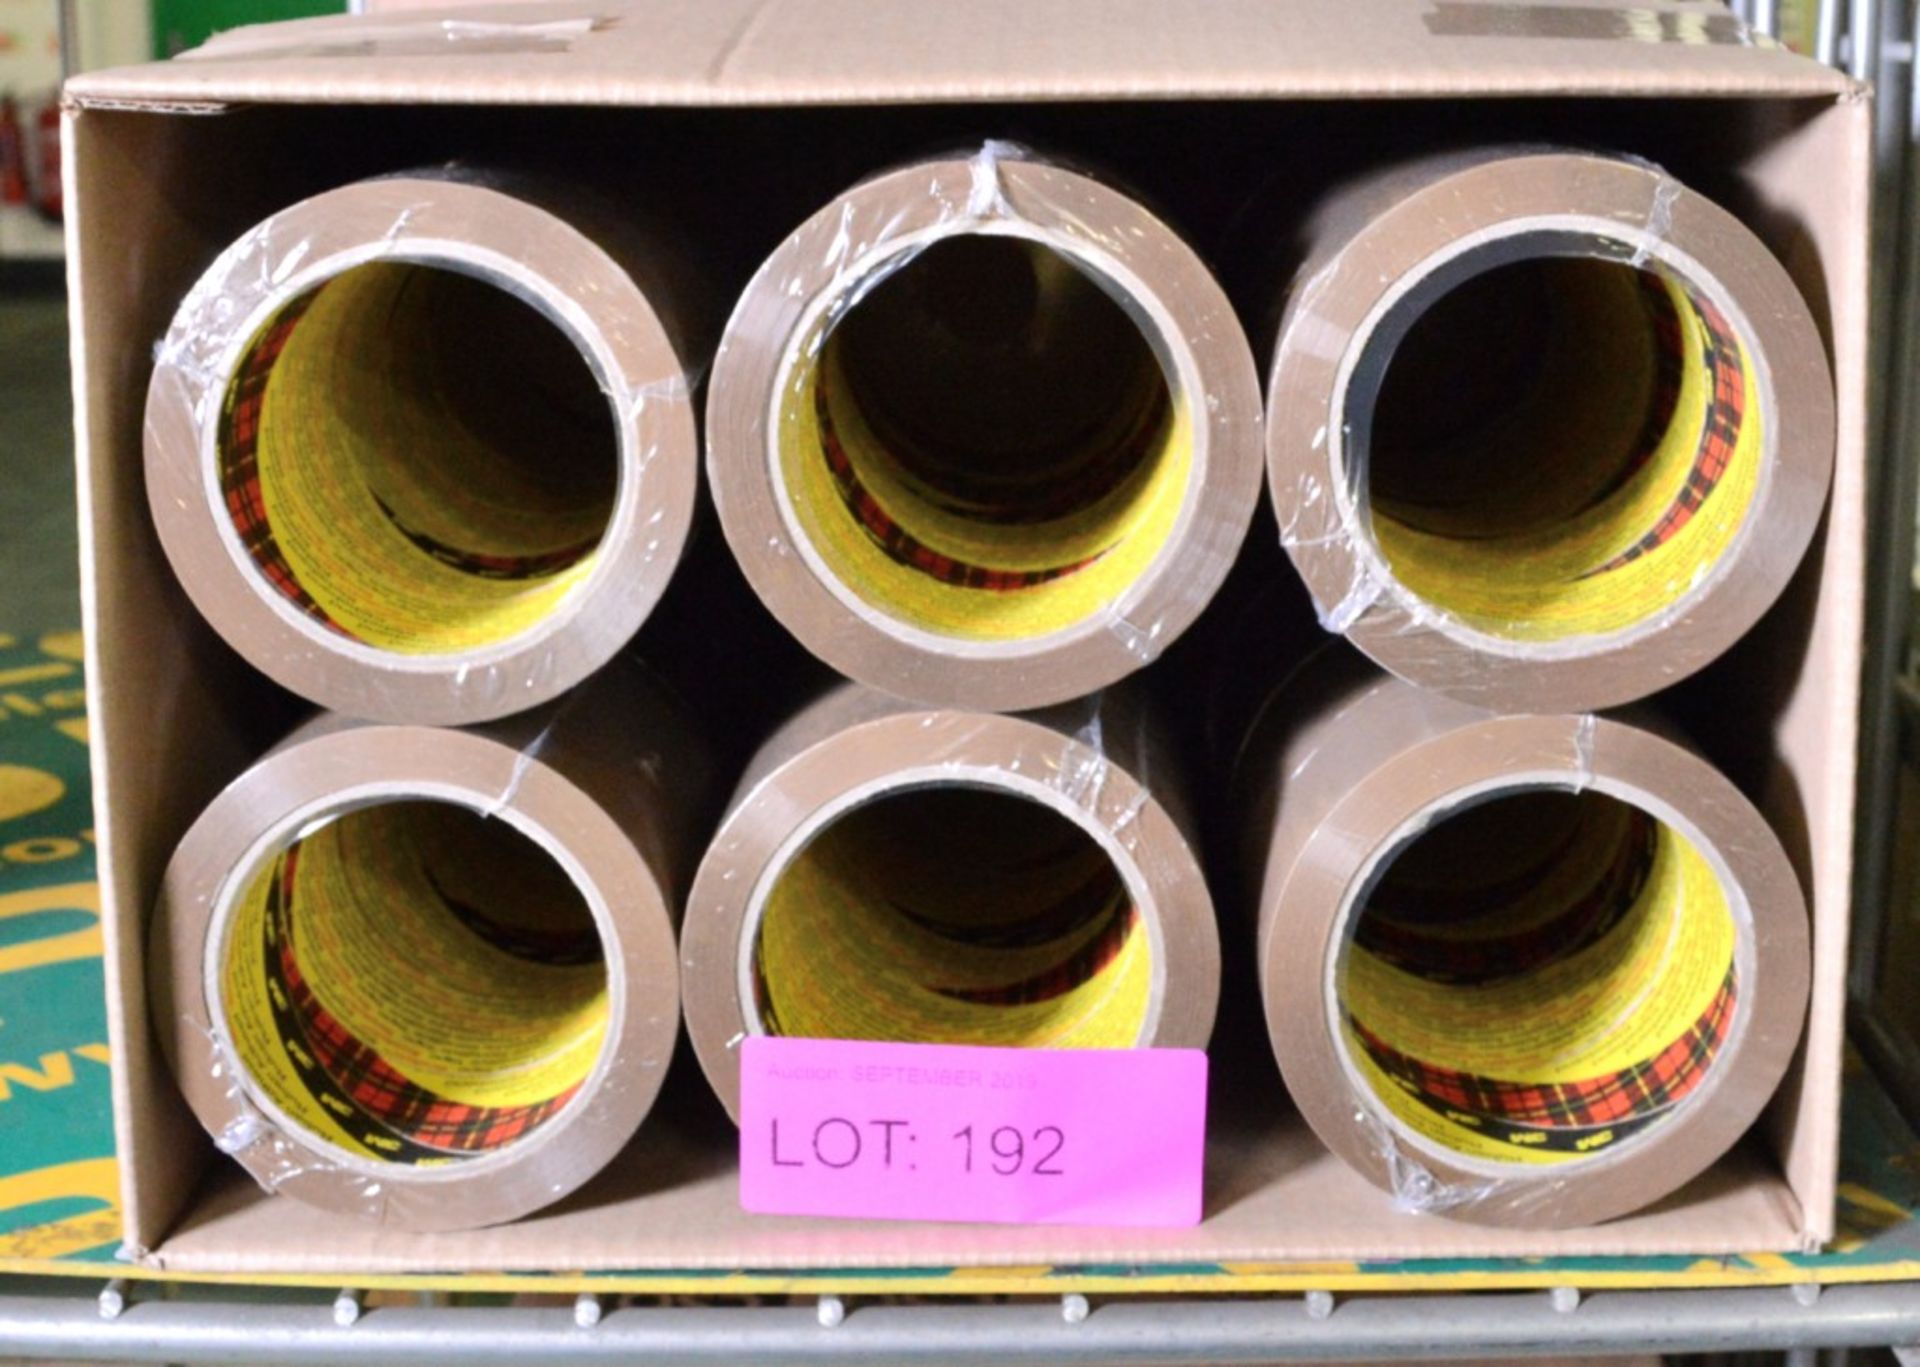 2x Boxes of 3M Scotch Brown Sealing Tape 100mm x 66m -18 Rolls per box.